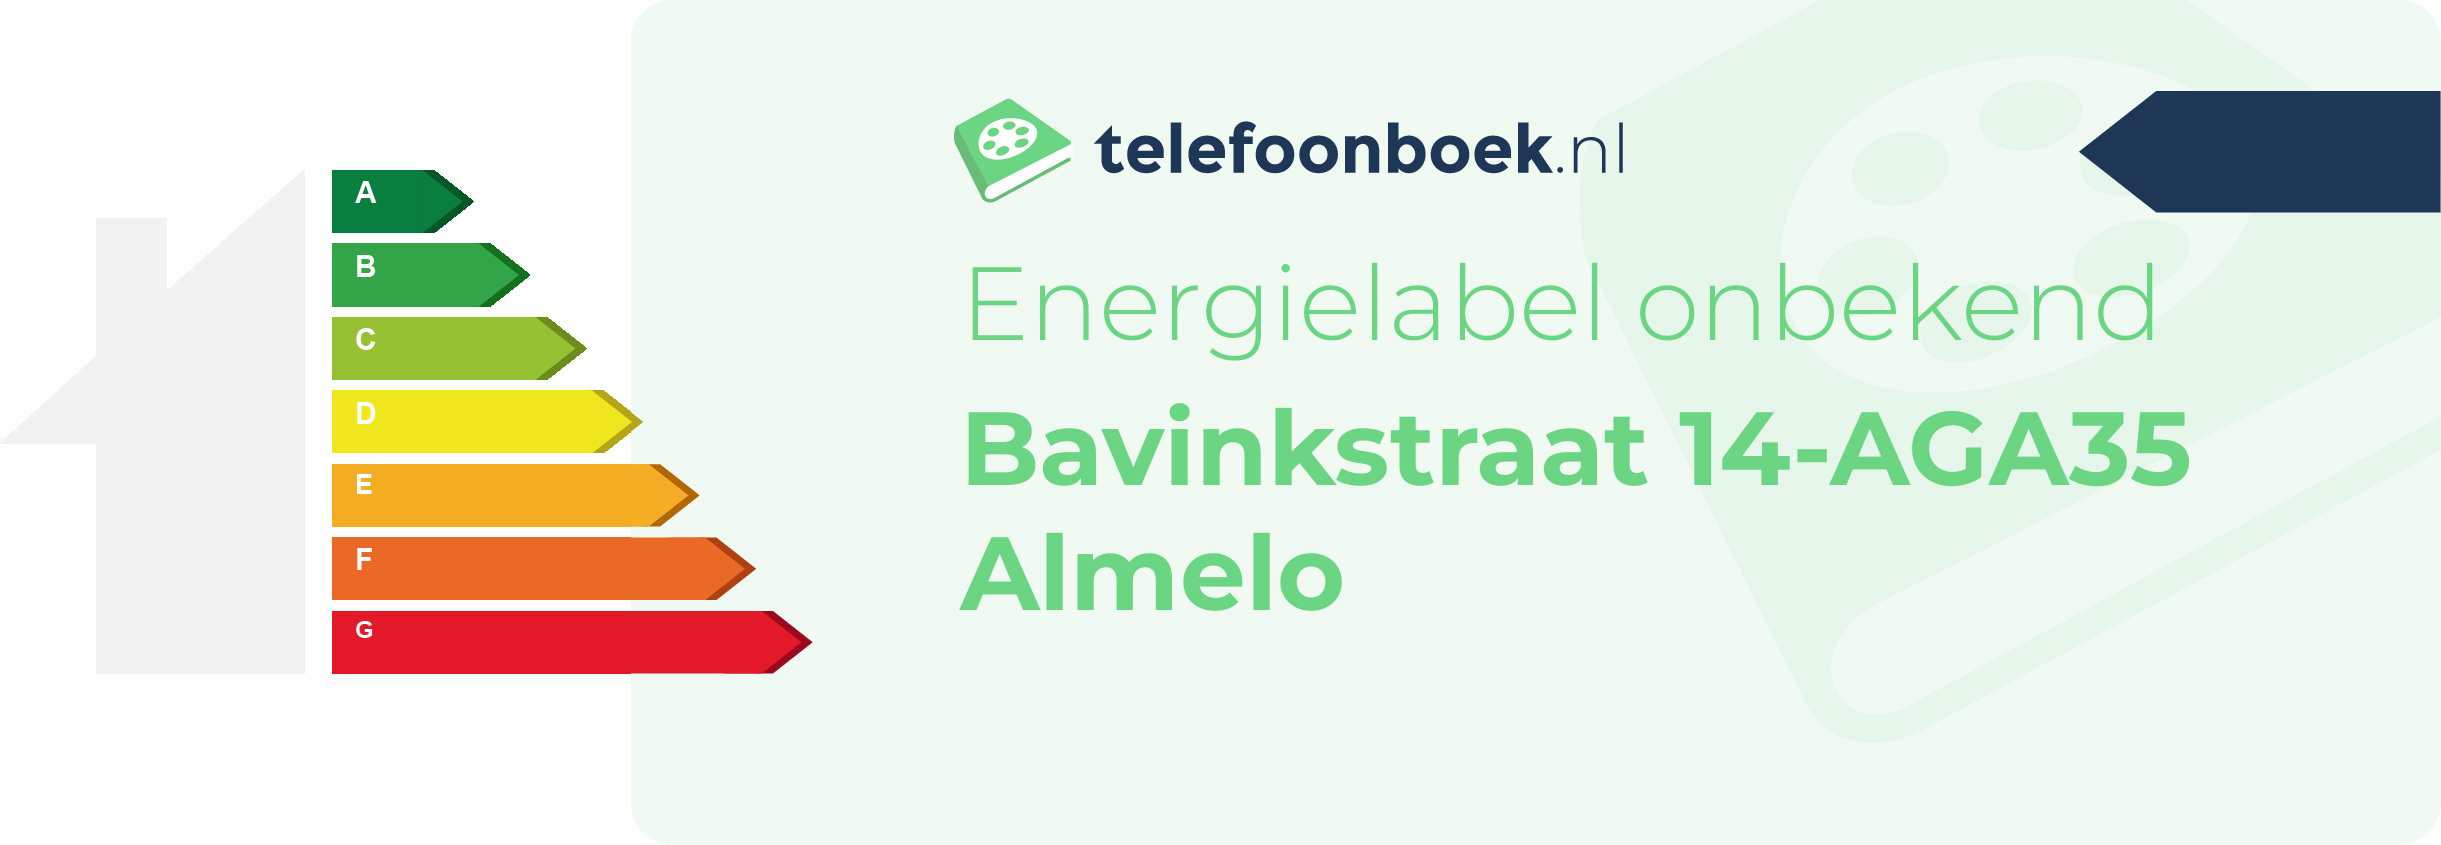 Energielabel Bavinkstraat 14-AGA35 Almelo